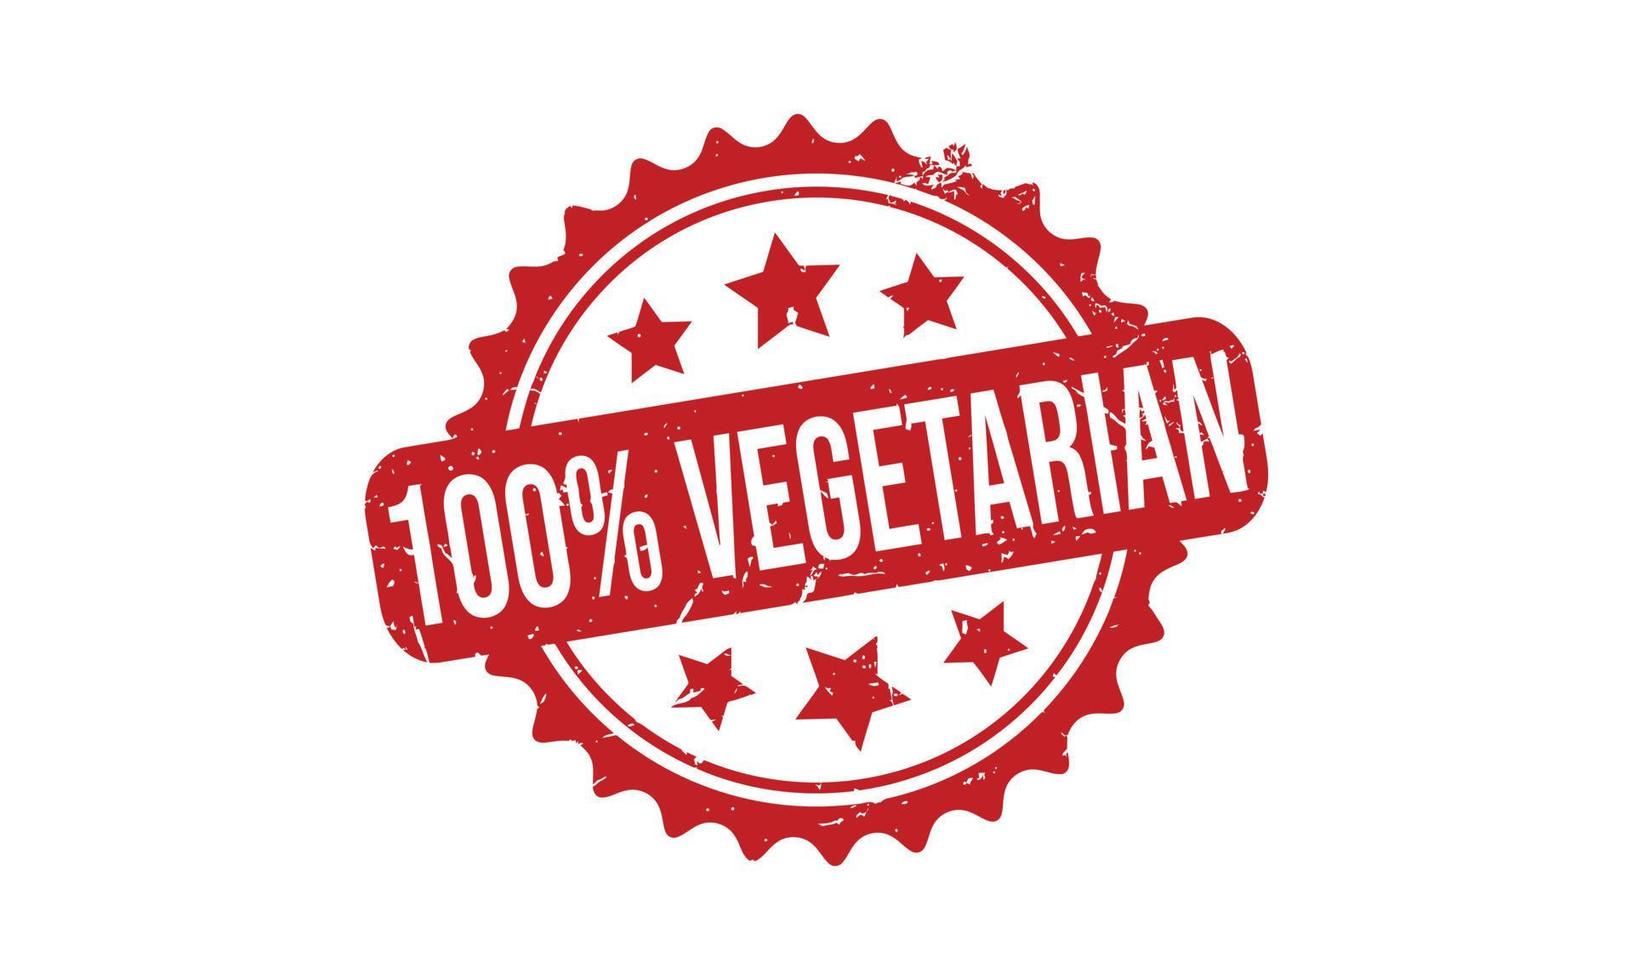 100 por cento vegetariano borracha carimbo vetor